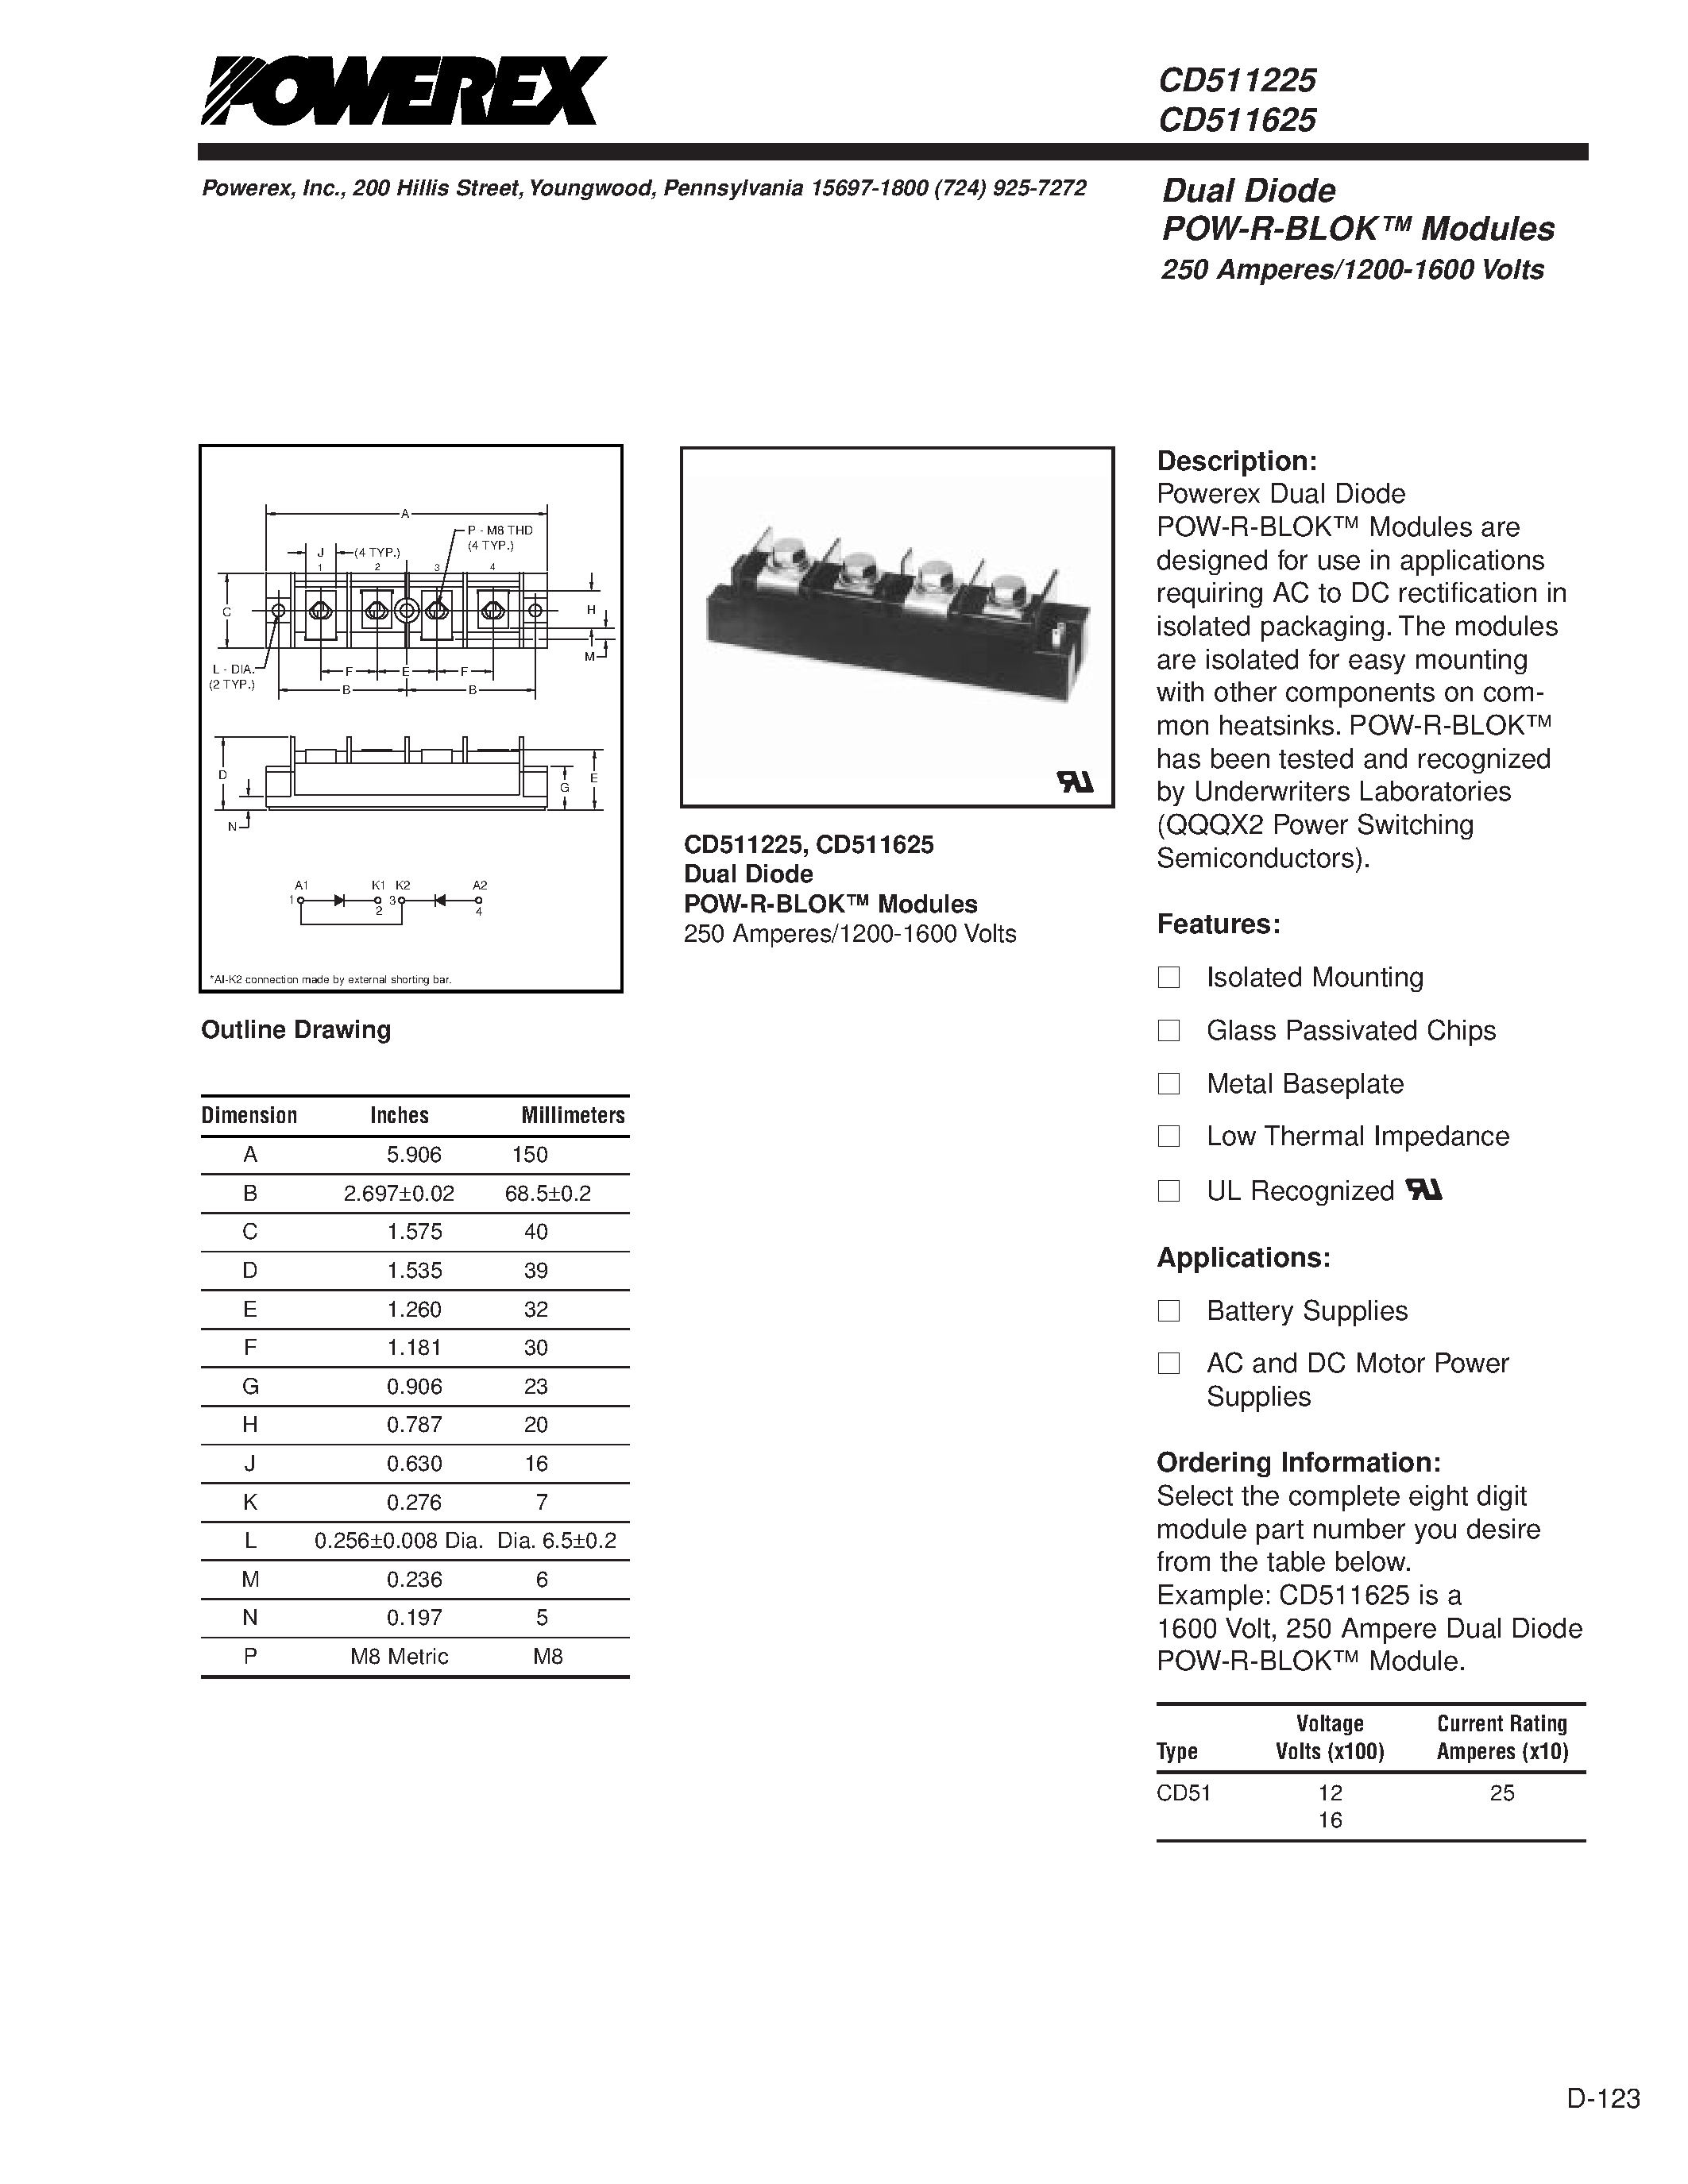 Даташит CD511225 - Dual Diode POW-R-BLOK Modules 250 Amperes/1200-1600 Volts страница 1